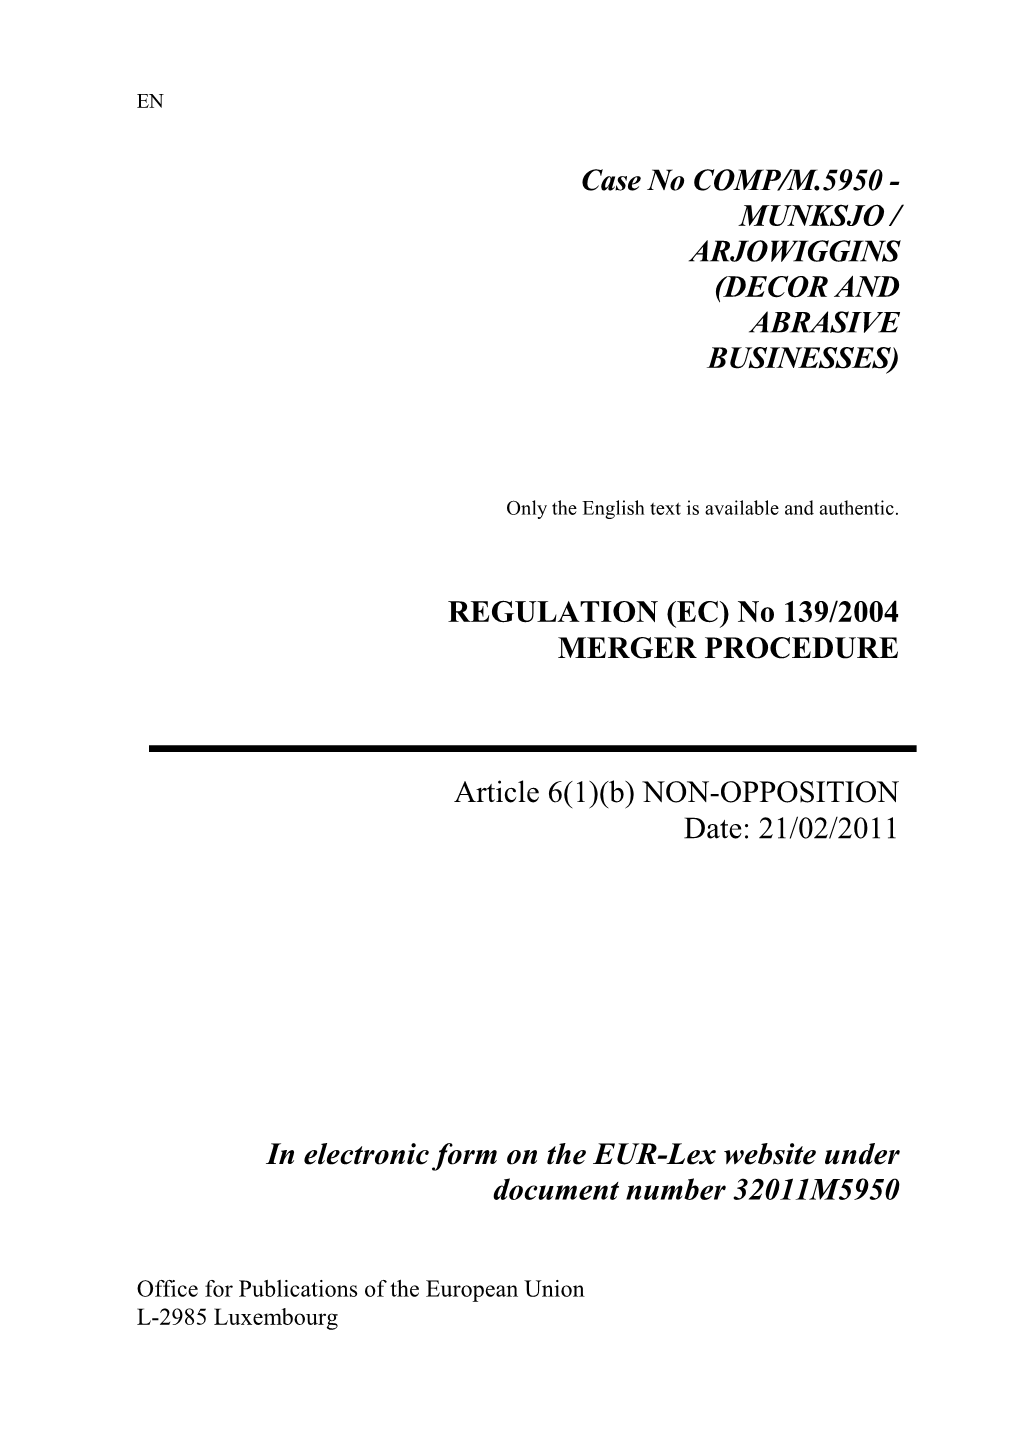 Case No COMP/M.5950 - MUNKSJO / ARJOWIGGINS (DECOR and ABRASIVE BUSINESSES)